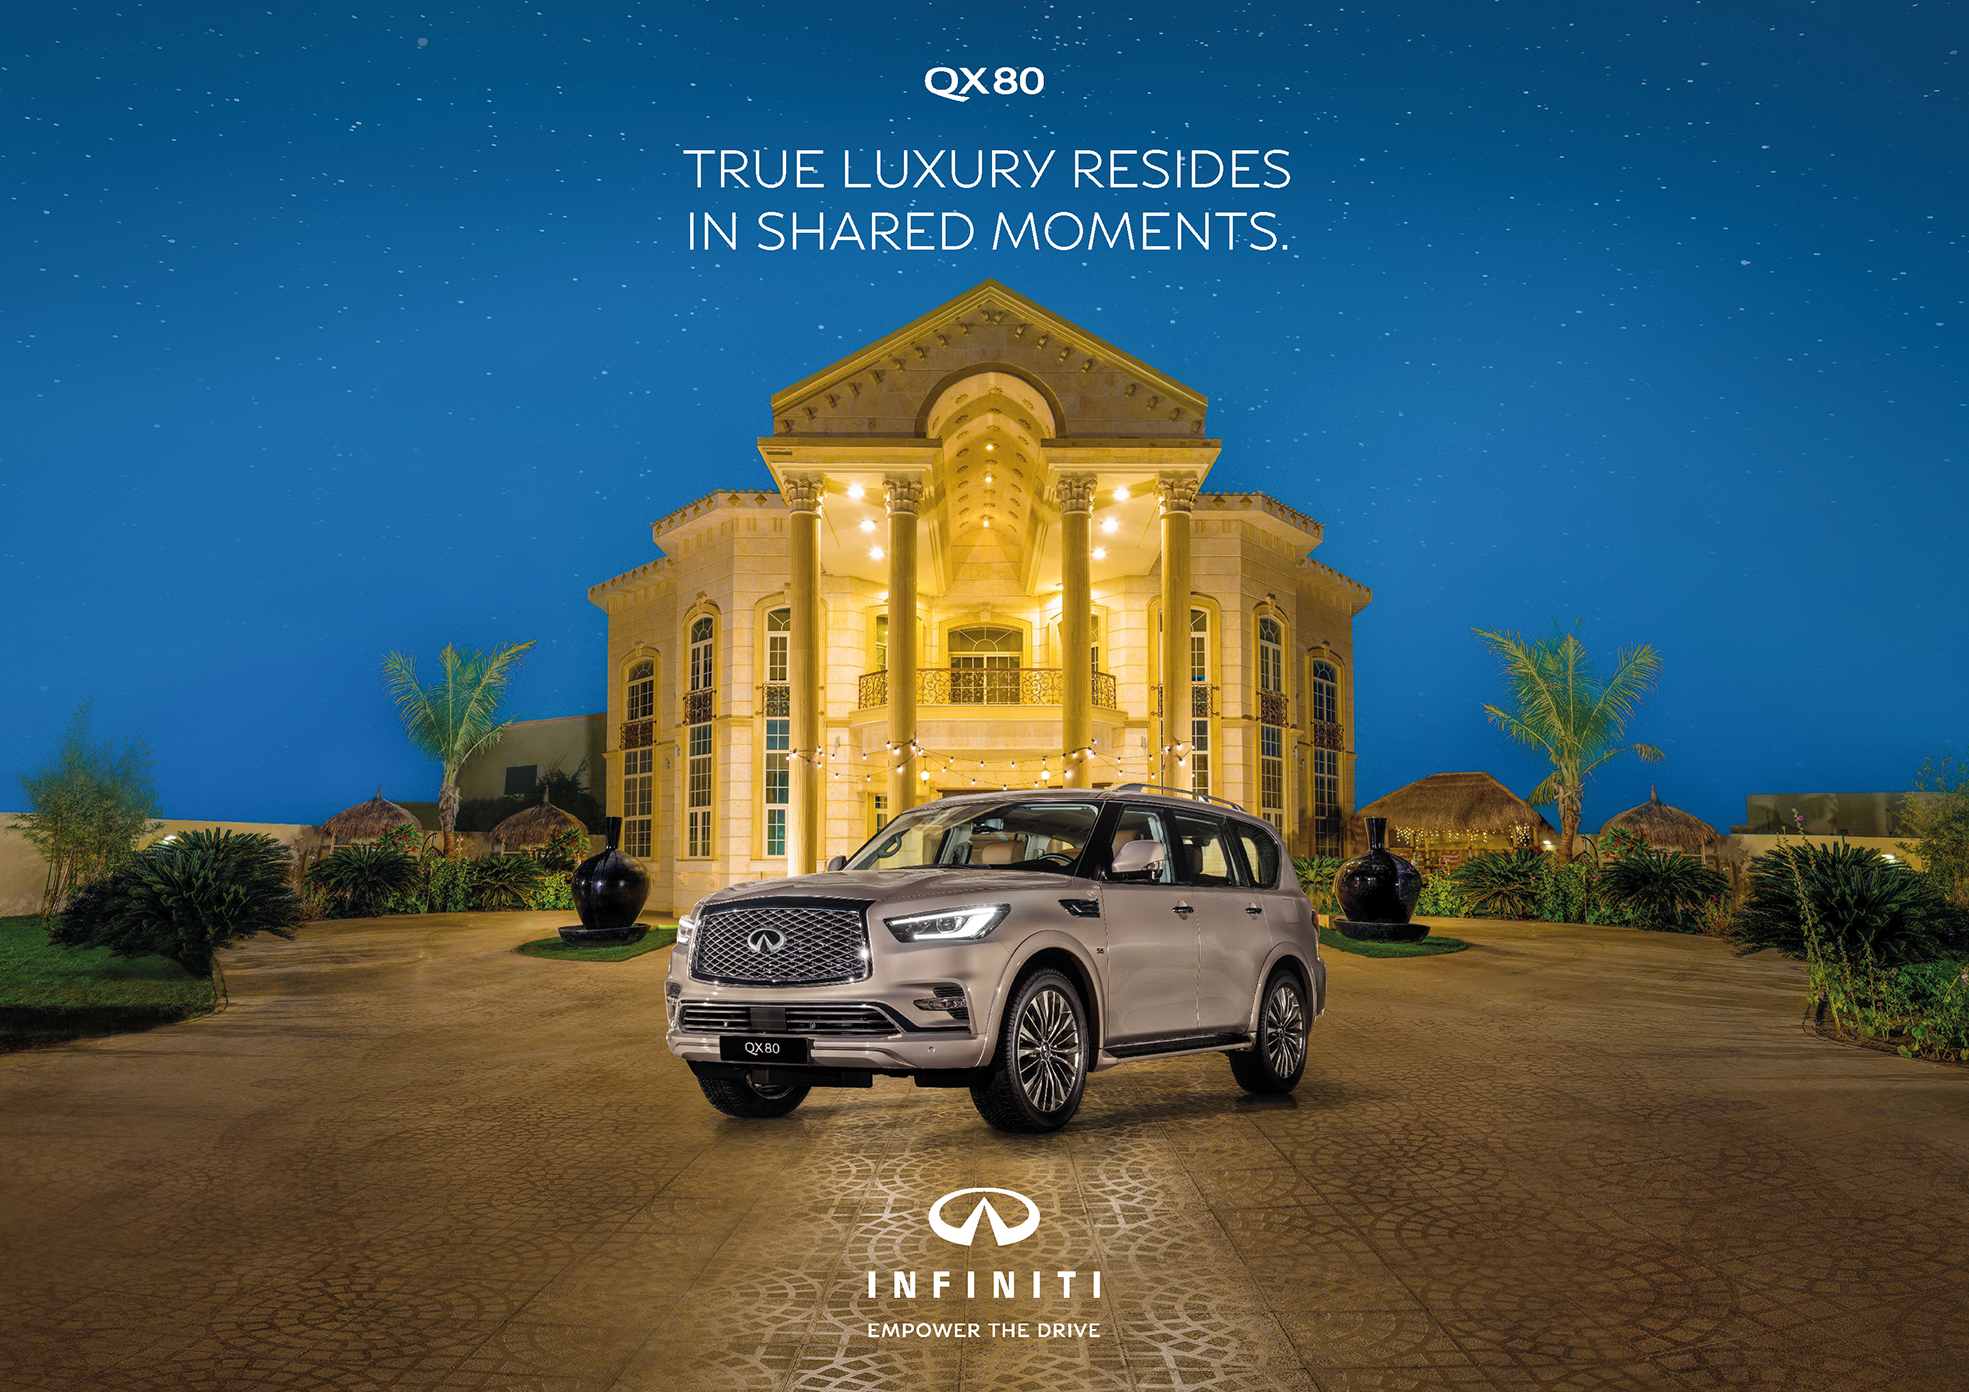 Special offers on full-size luxury SUV INFINITI QX80 this Ramadan